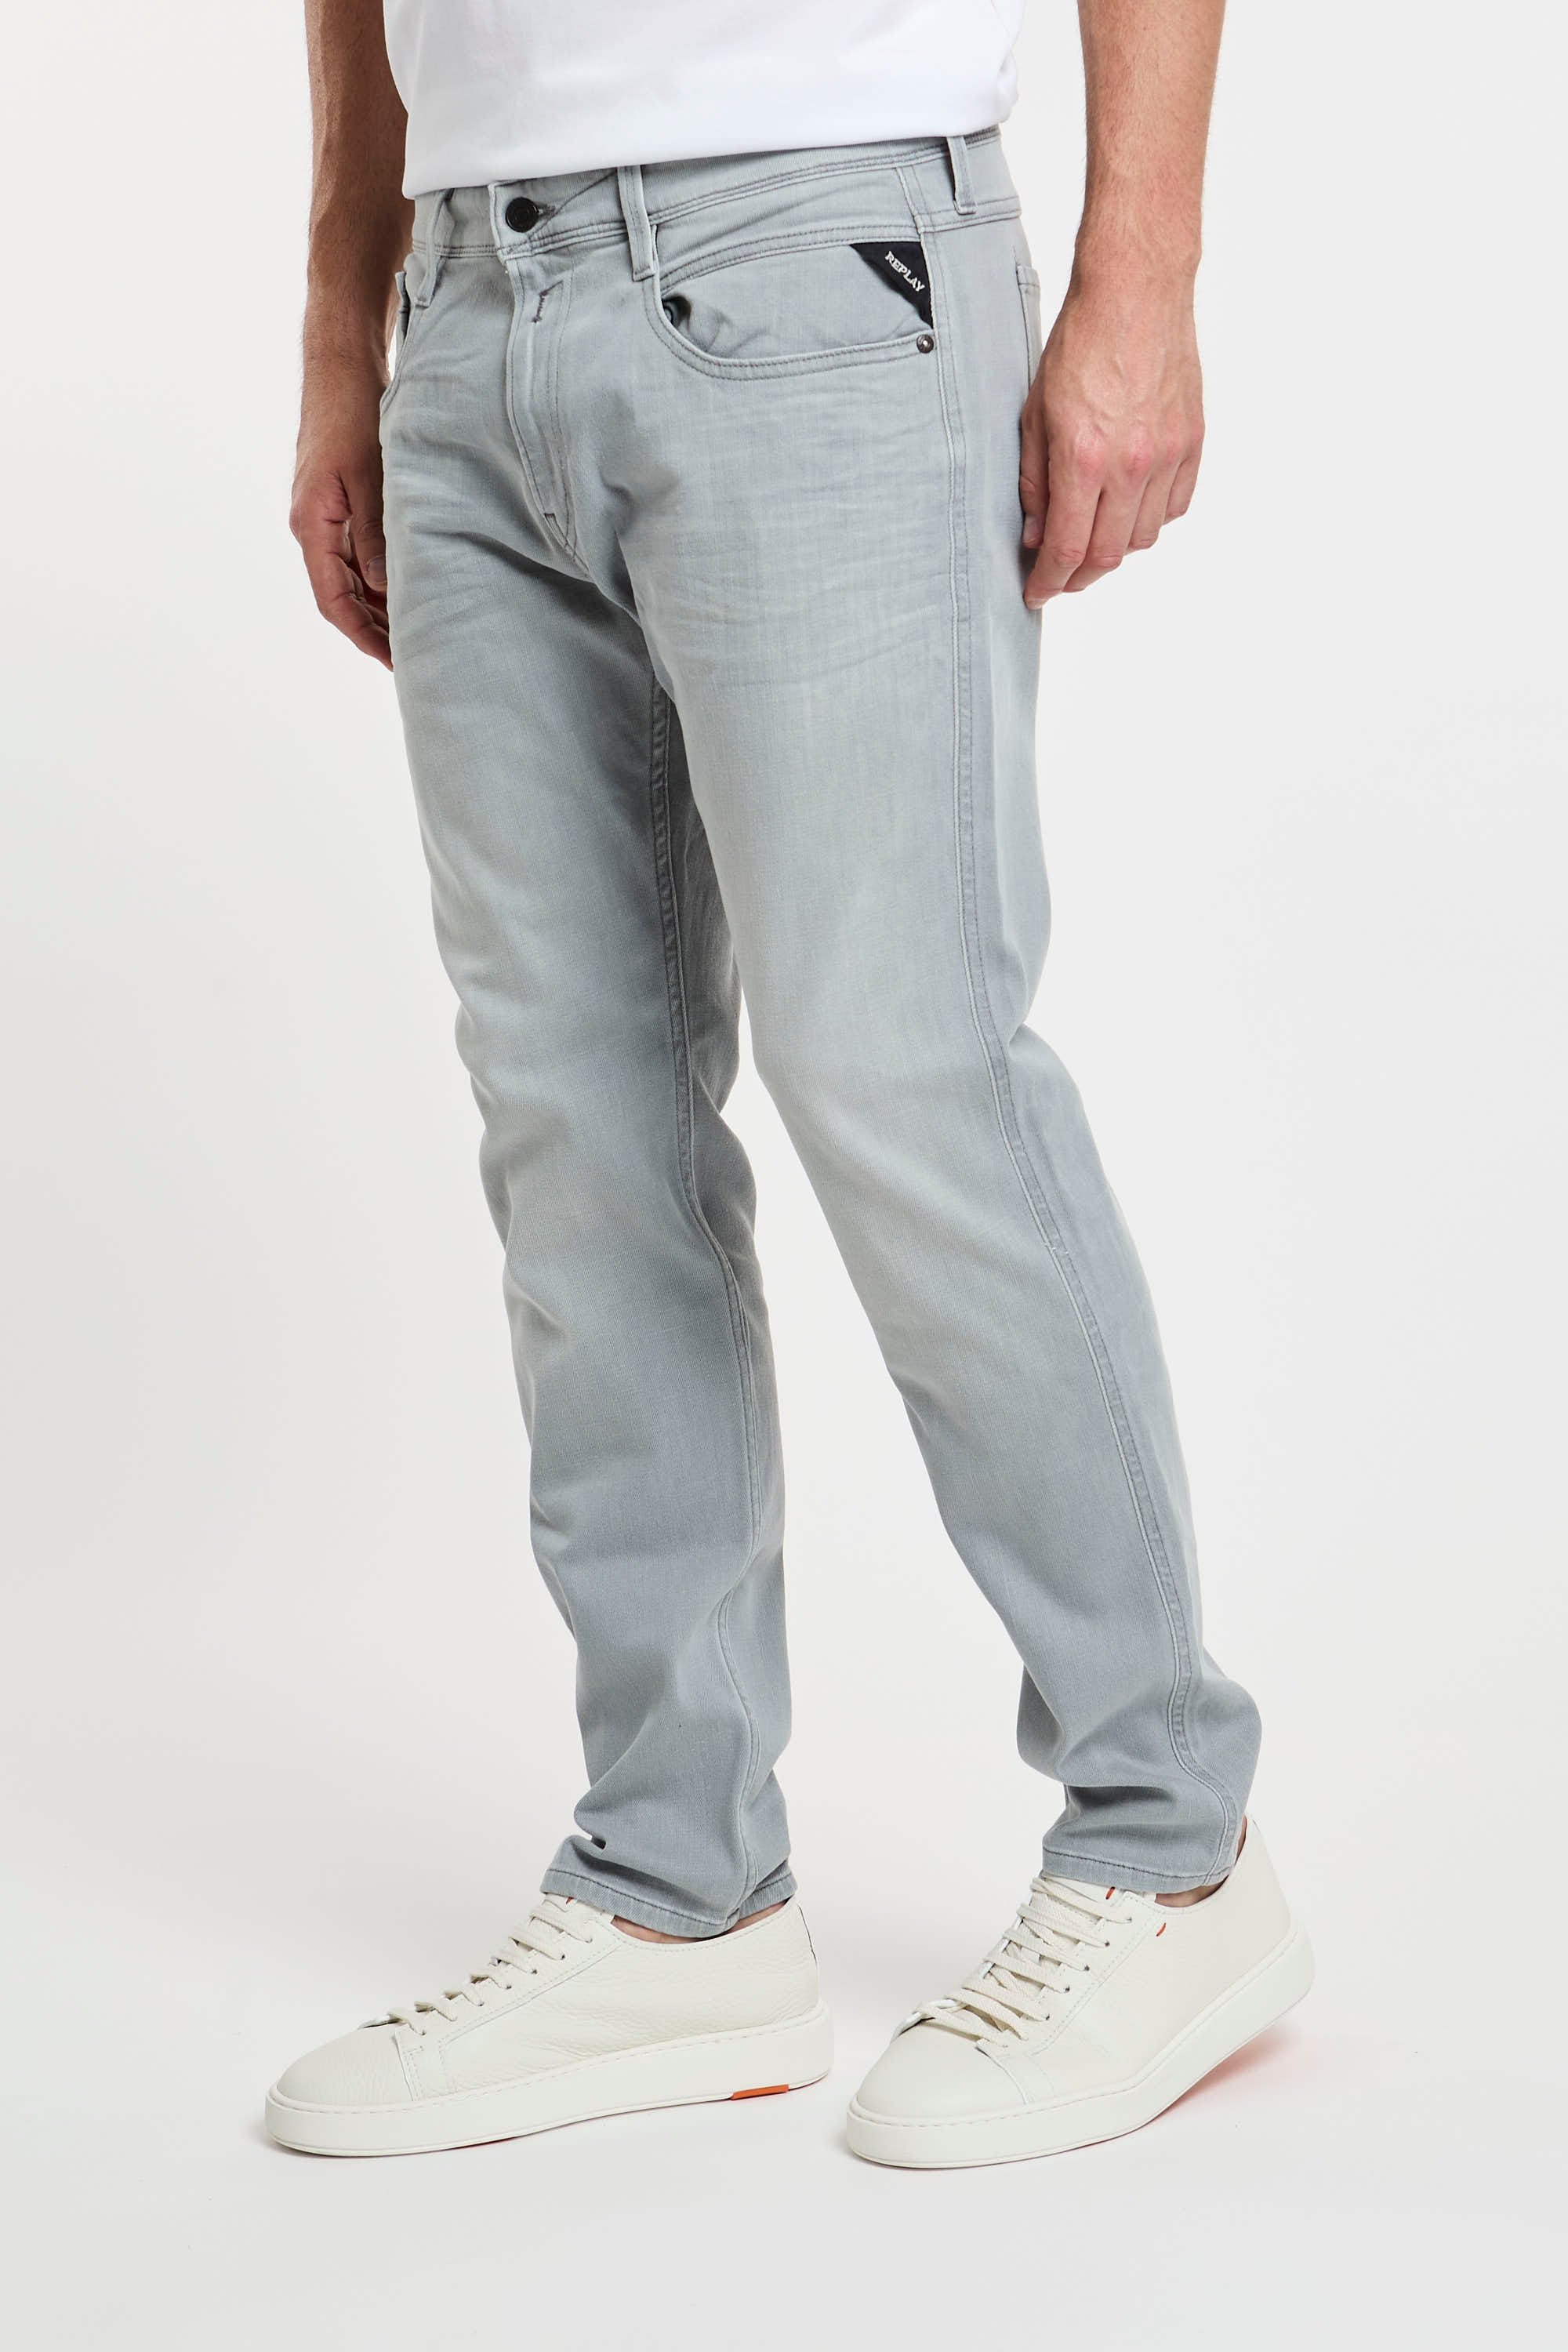 Replay Slim Fit Jeans Anbass Cotton/Elastane Light Grey-1